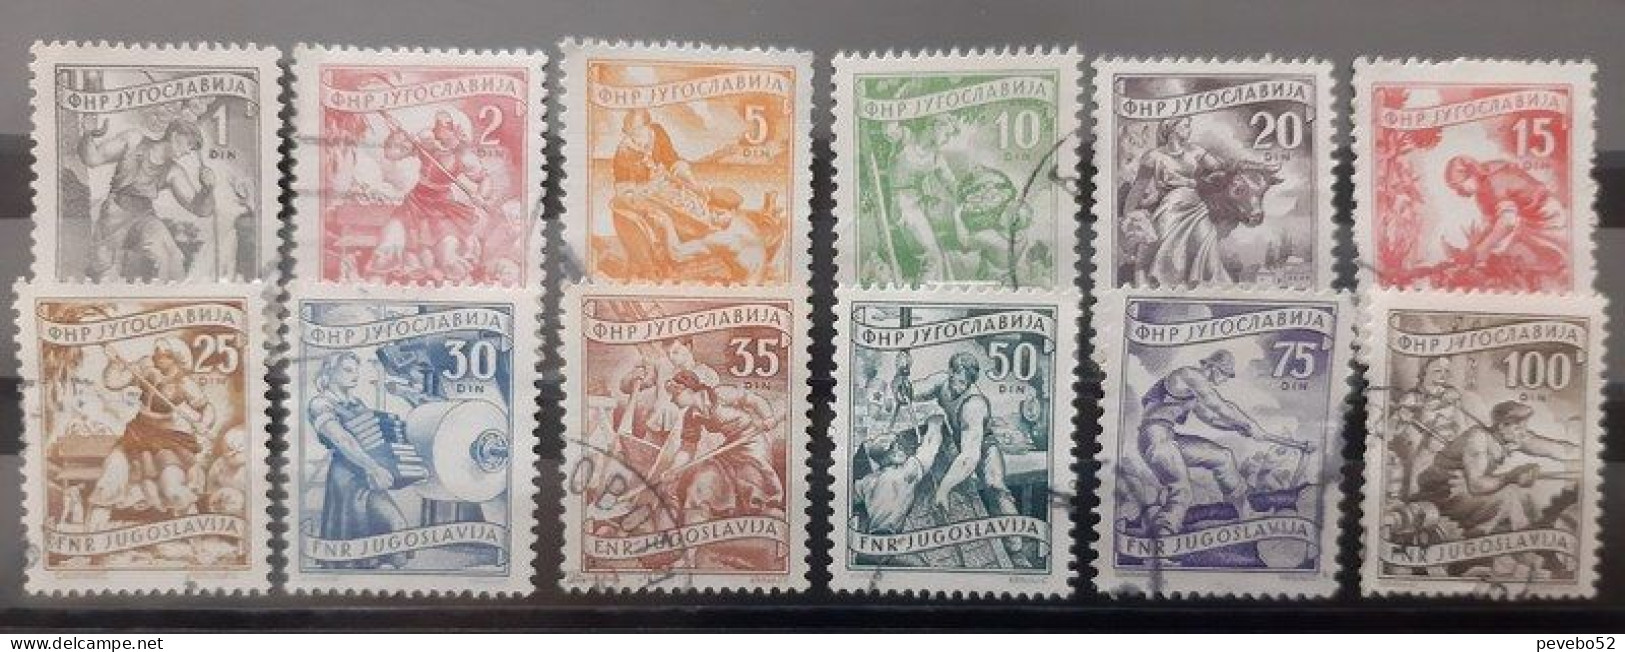 YUGOSLAVIA 1951 -  Local Economy USED - Used Stamps